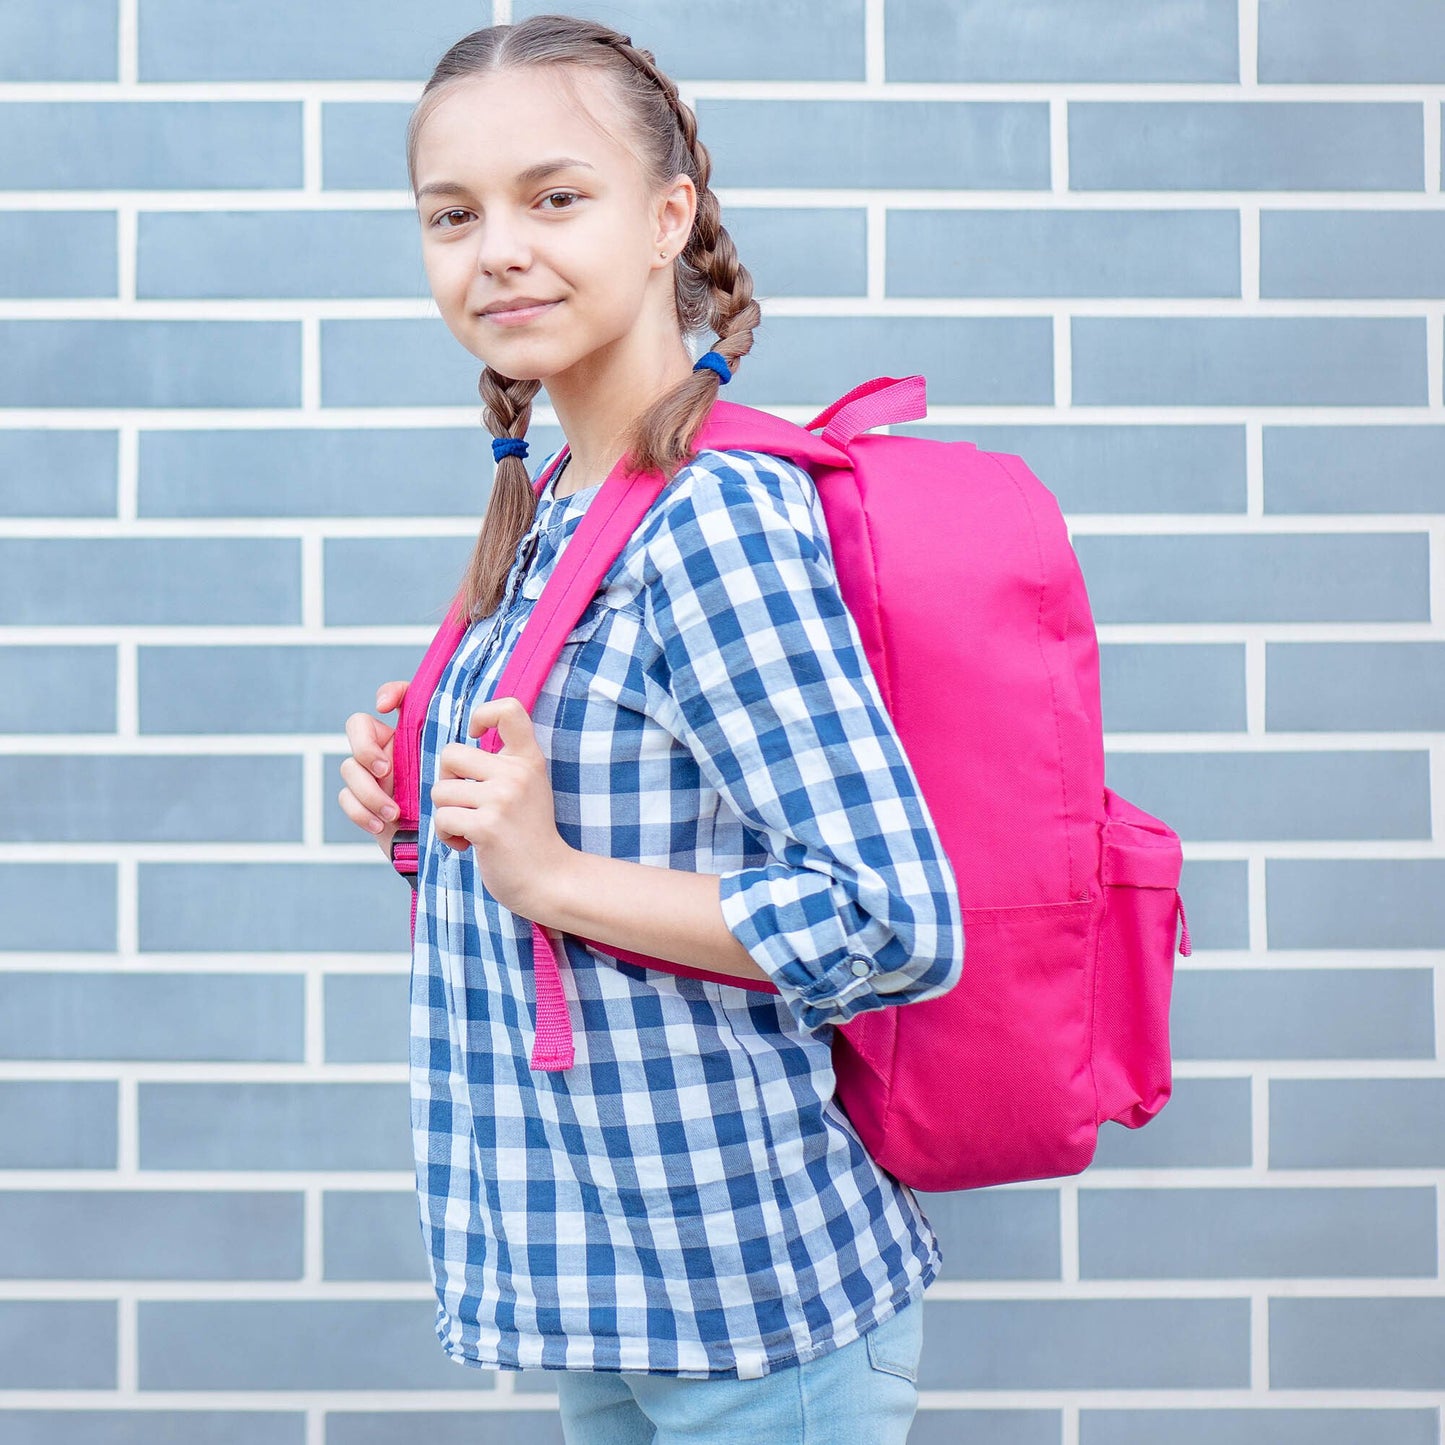 School Backpacks & Supplies for Kids In Need